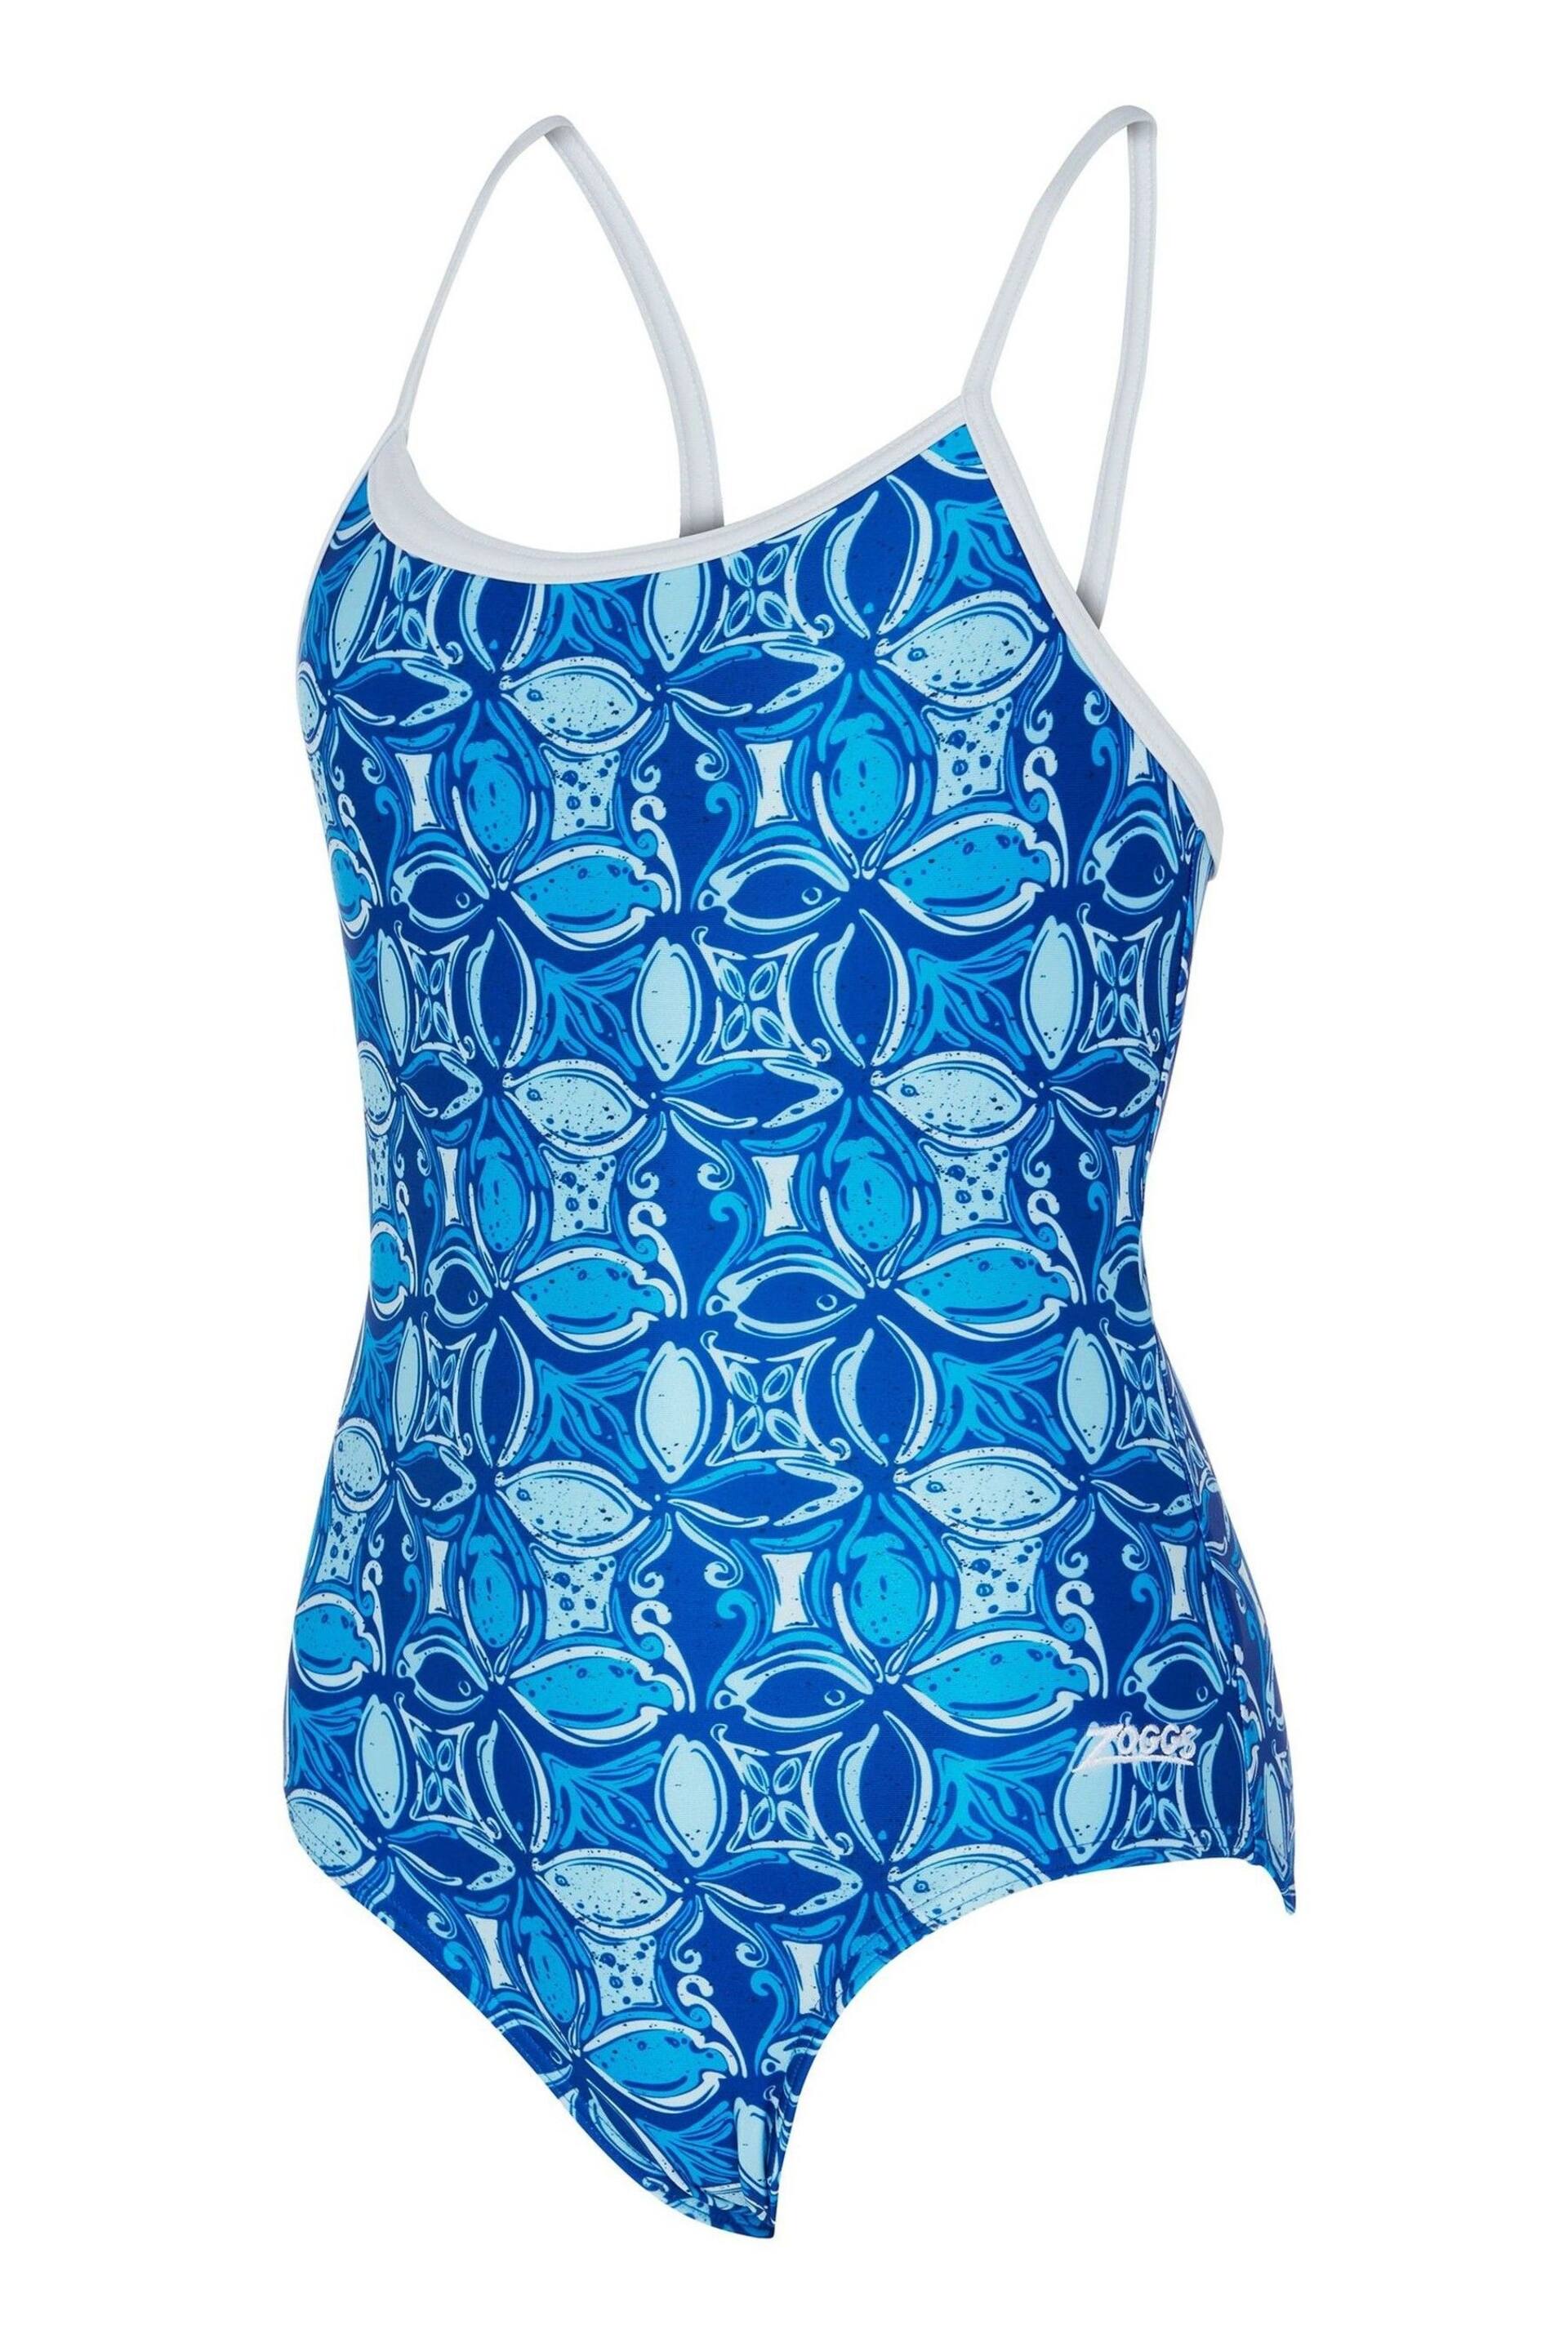 Zoggs Girls Sprintback Swimsuit - Image 4 of 5